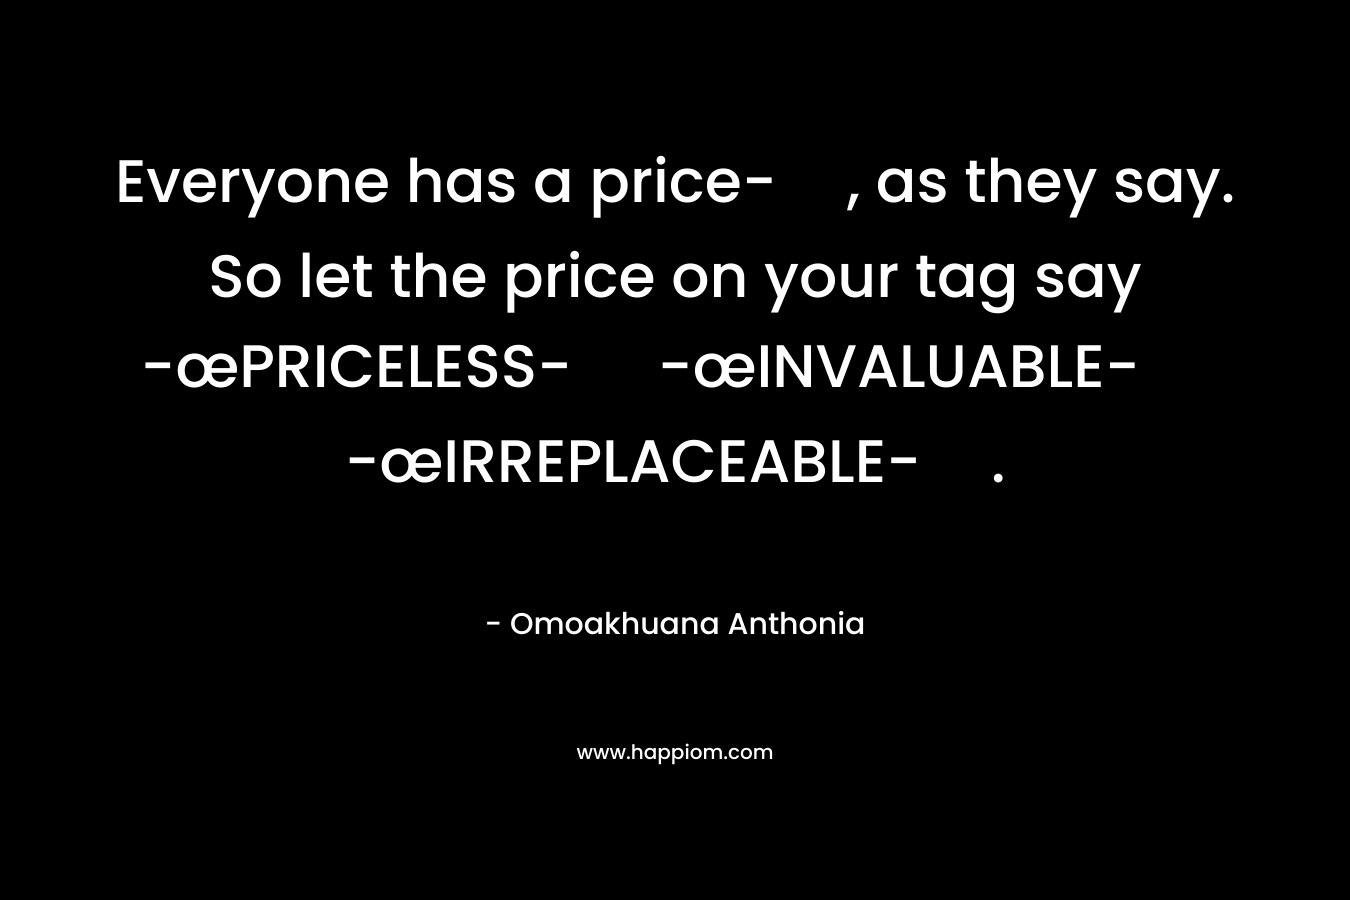 Everyone has a price-, as they say. So let the price on your tag say -œPRICELESS- -œINVALUABLE- -œIRREPLACEABLE-.